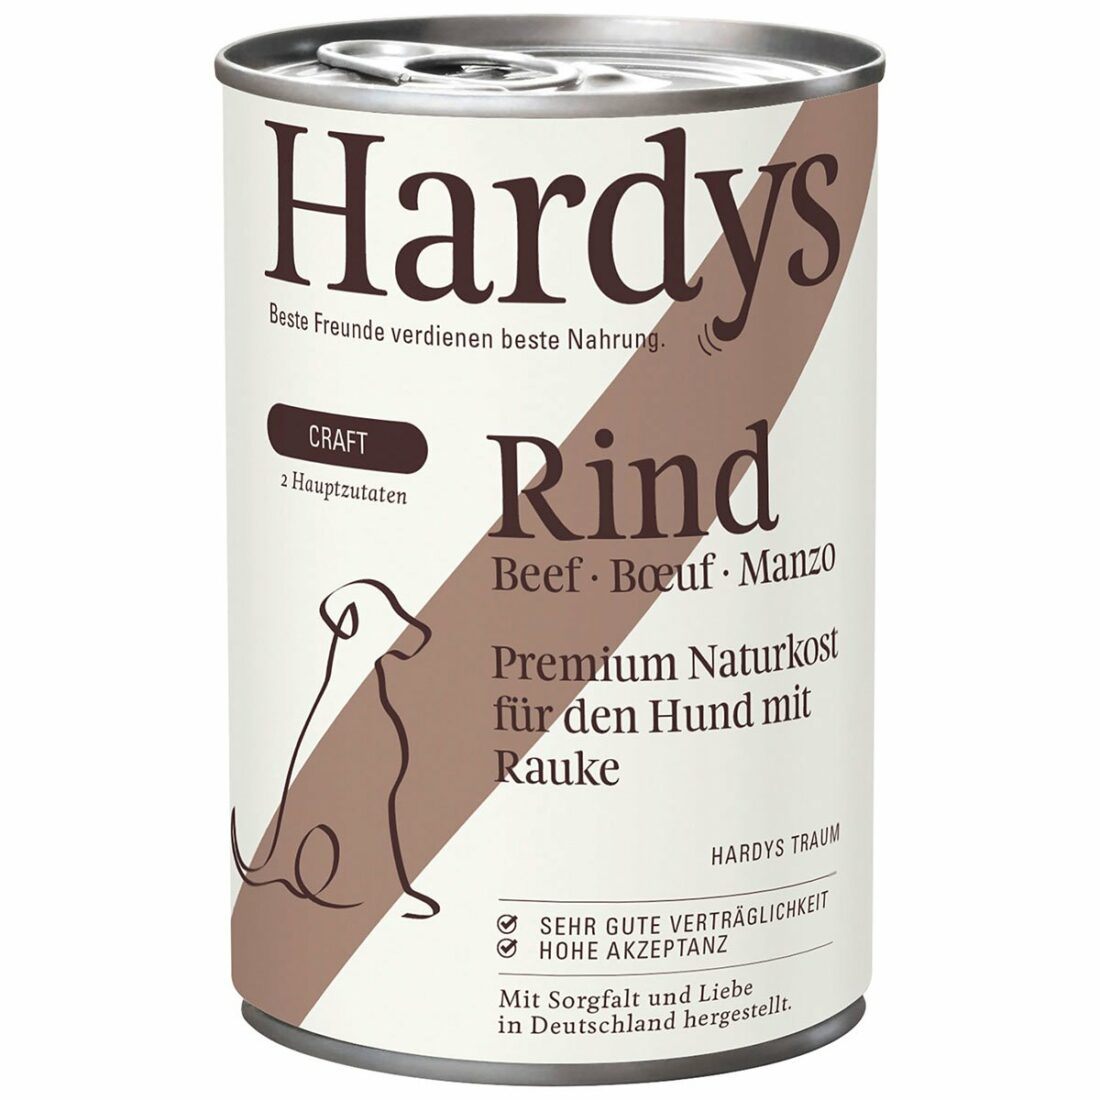 Hardys Craft hovězí maso a roketa